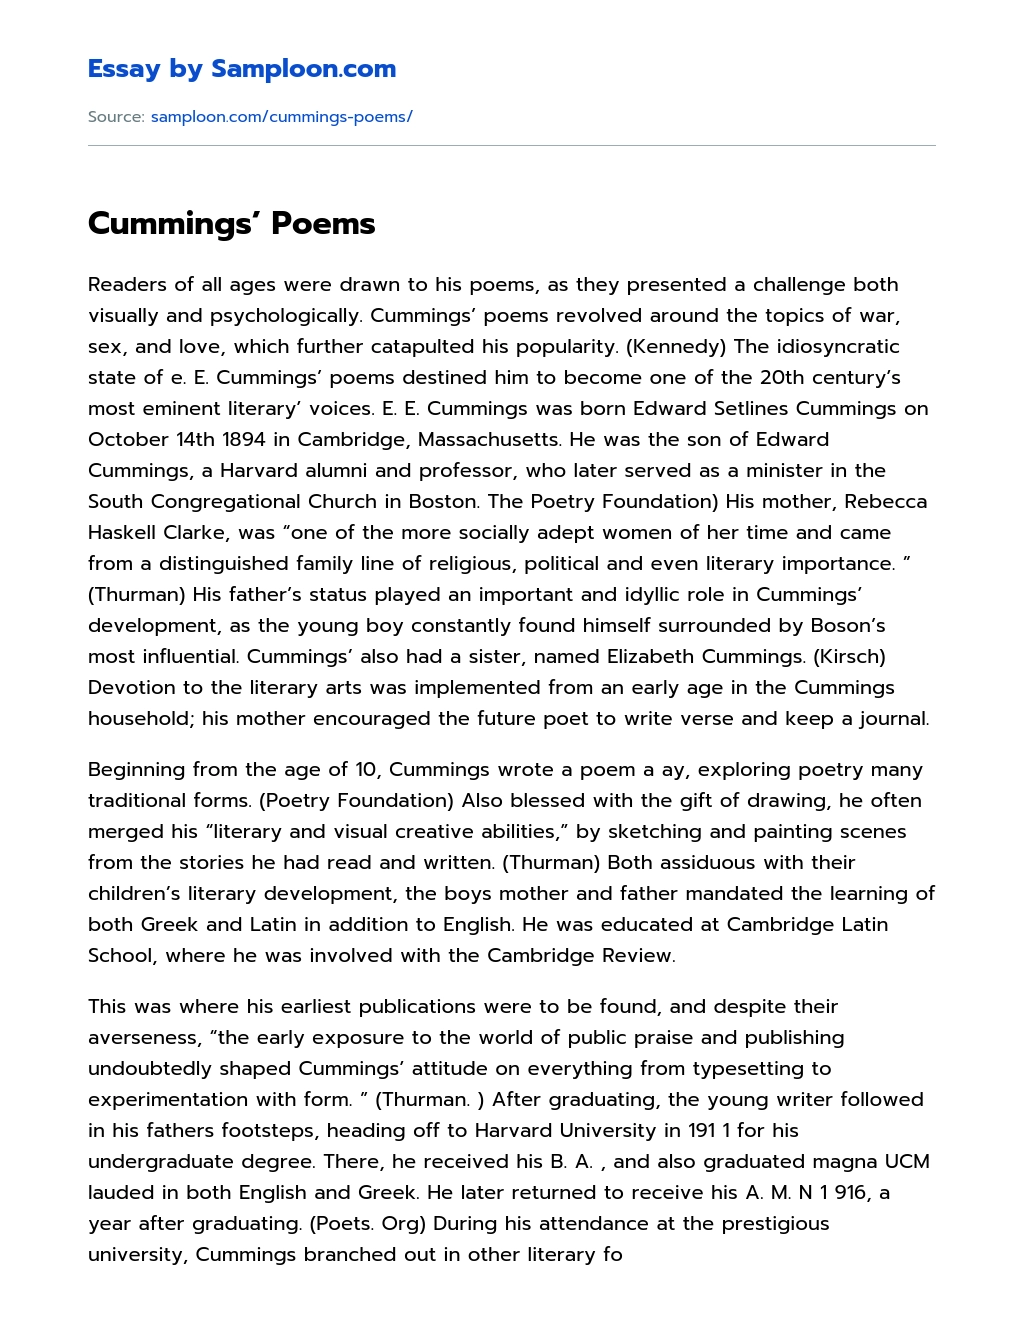 Cummings’ Poems Analytical Essay essay